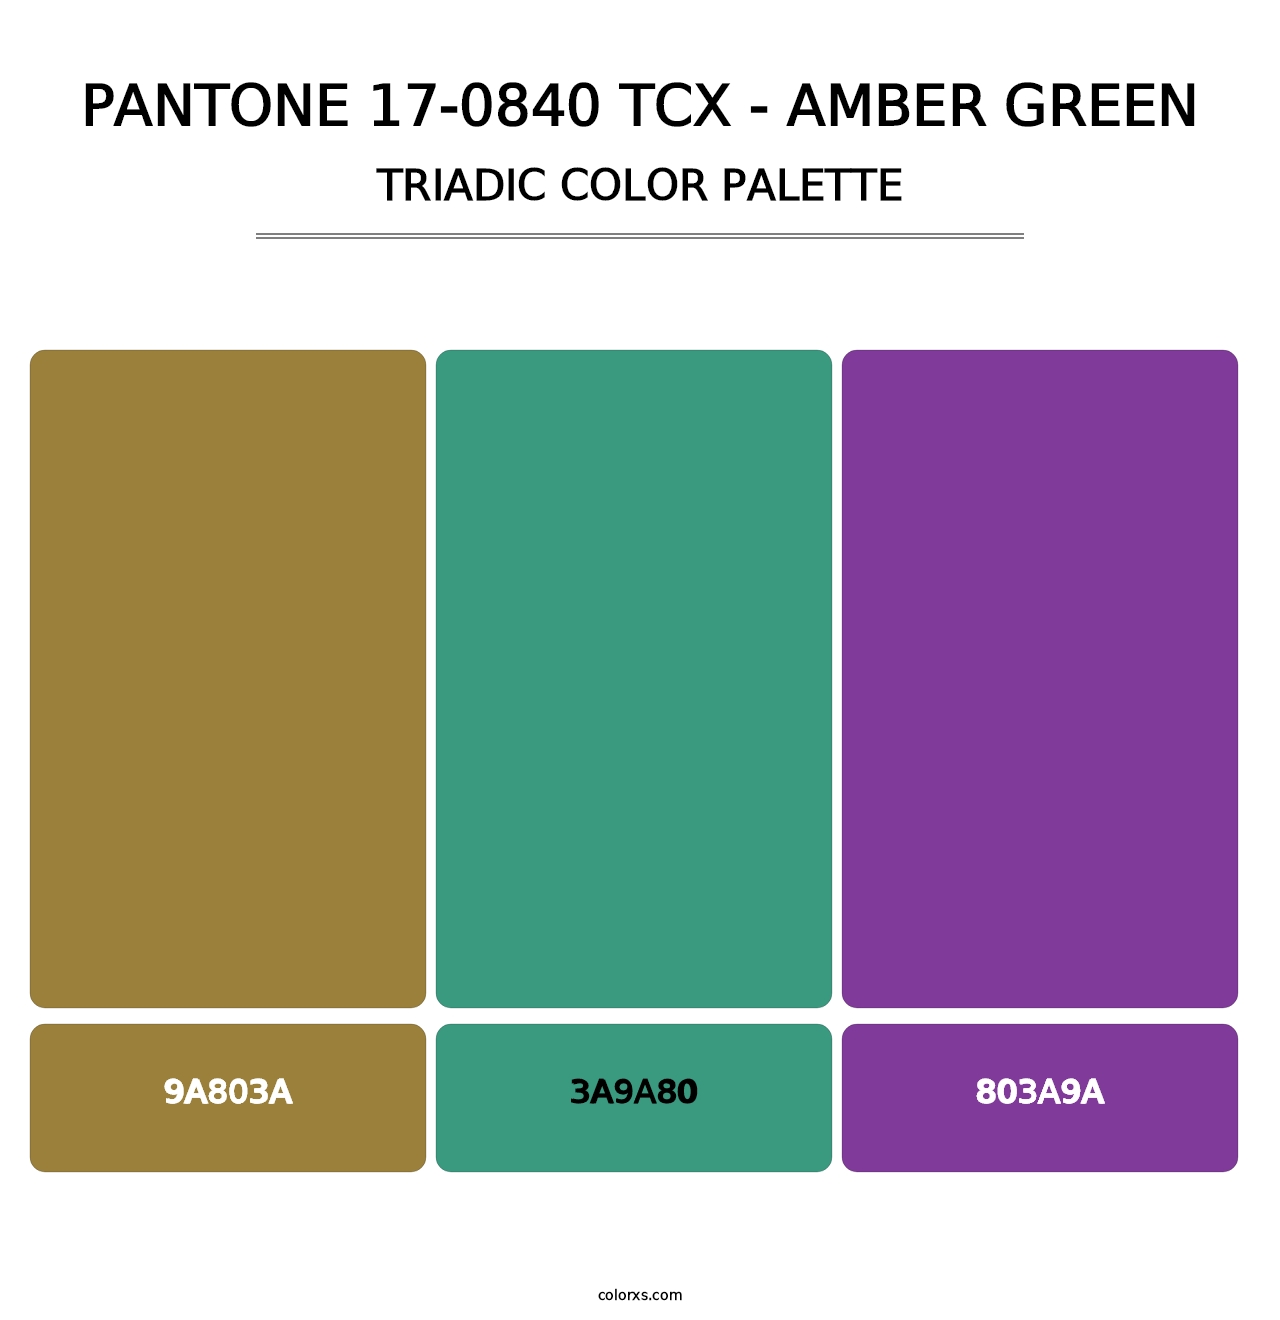 PANTONE 17-0840 TCX - Amber Green - Triadic Color Palette